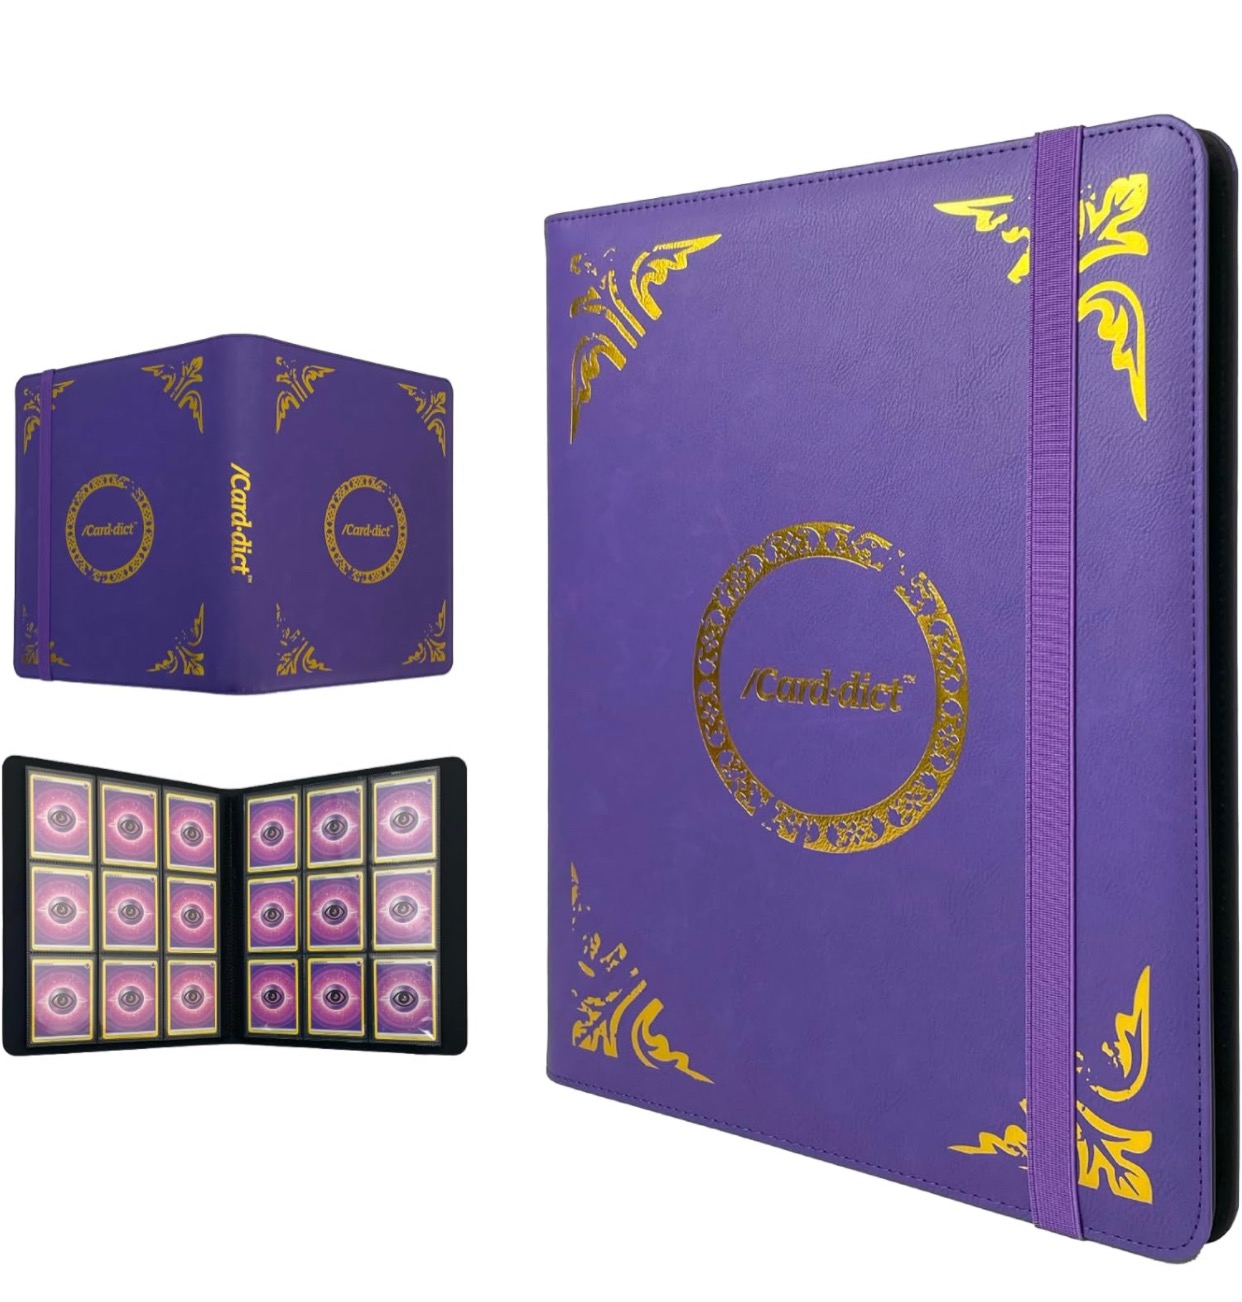 Purple binder